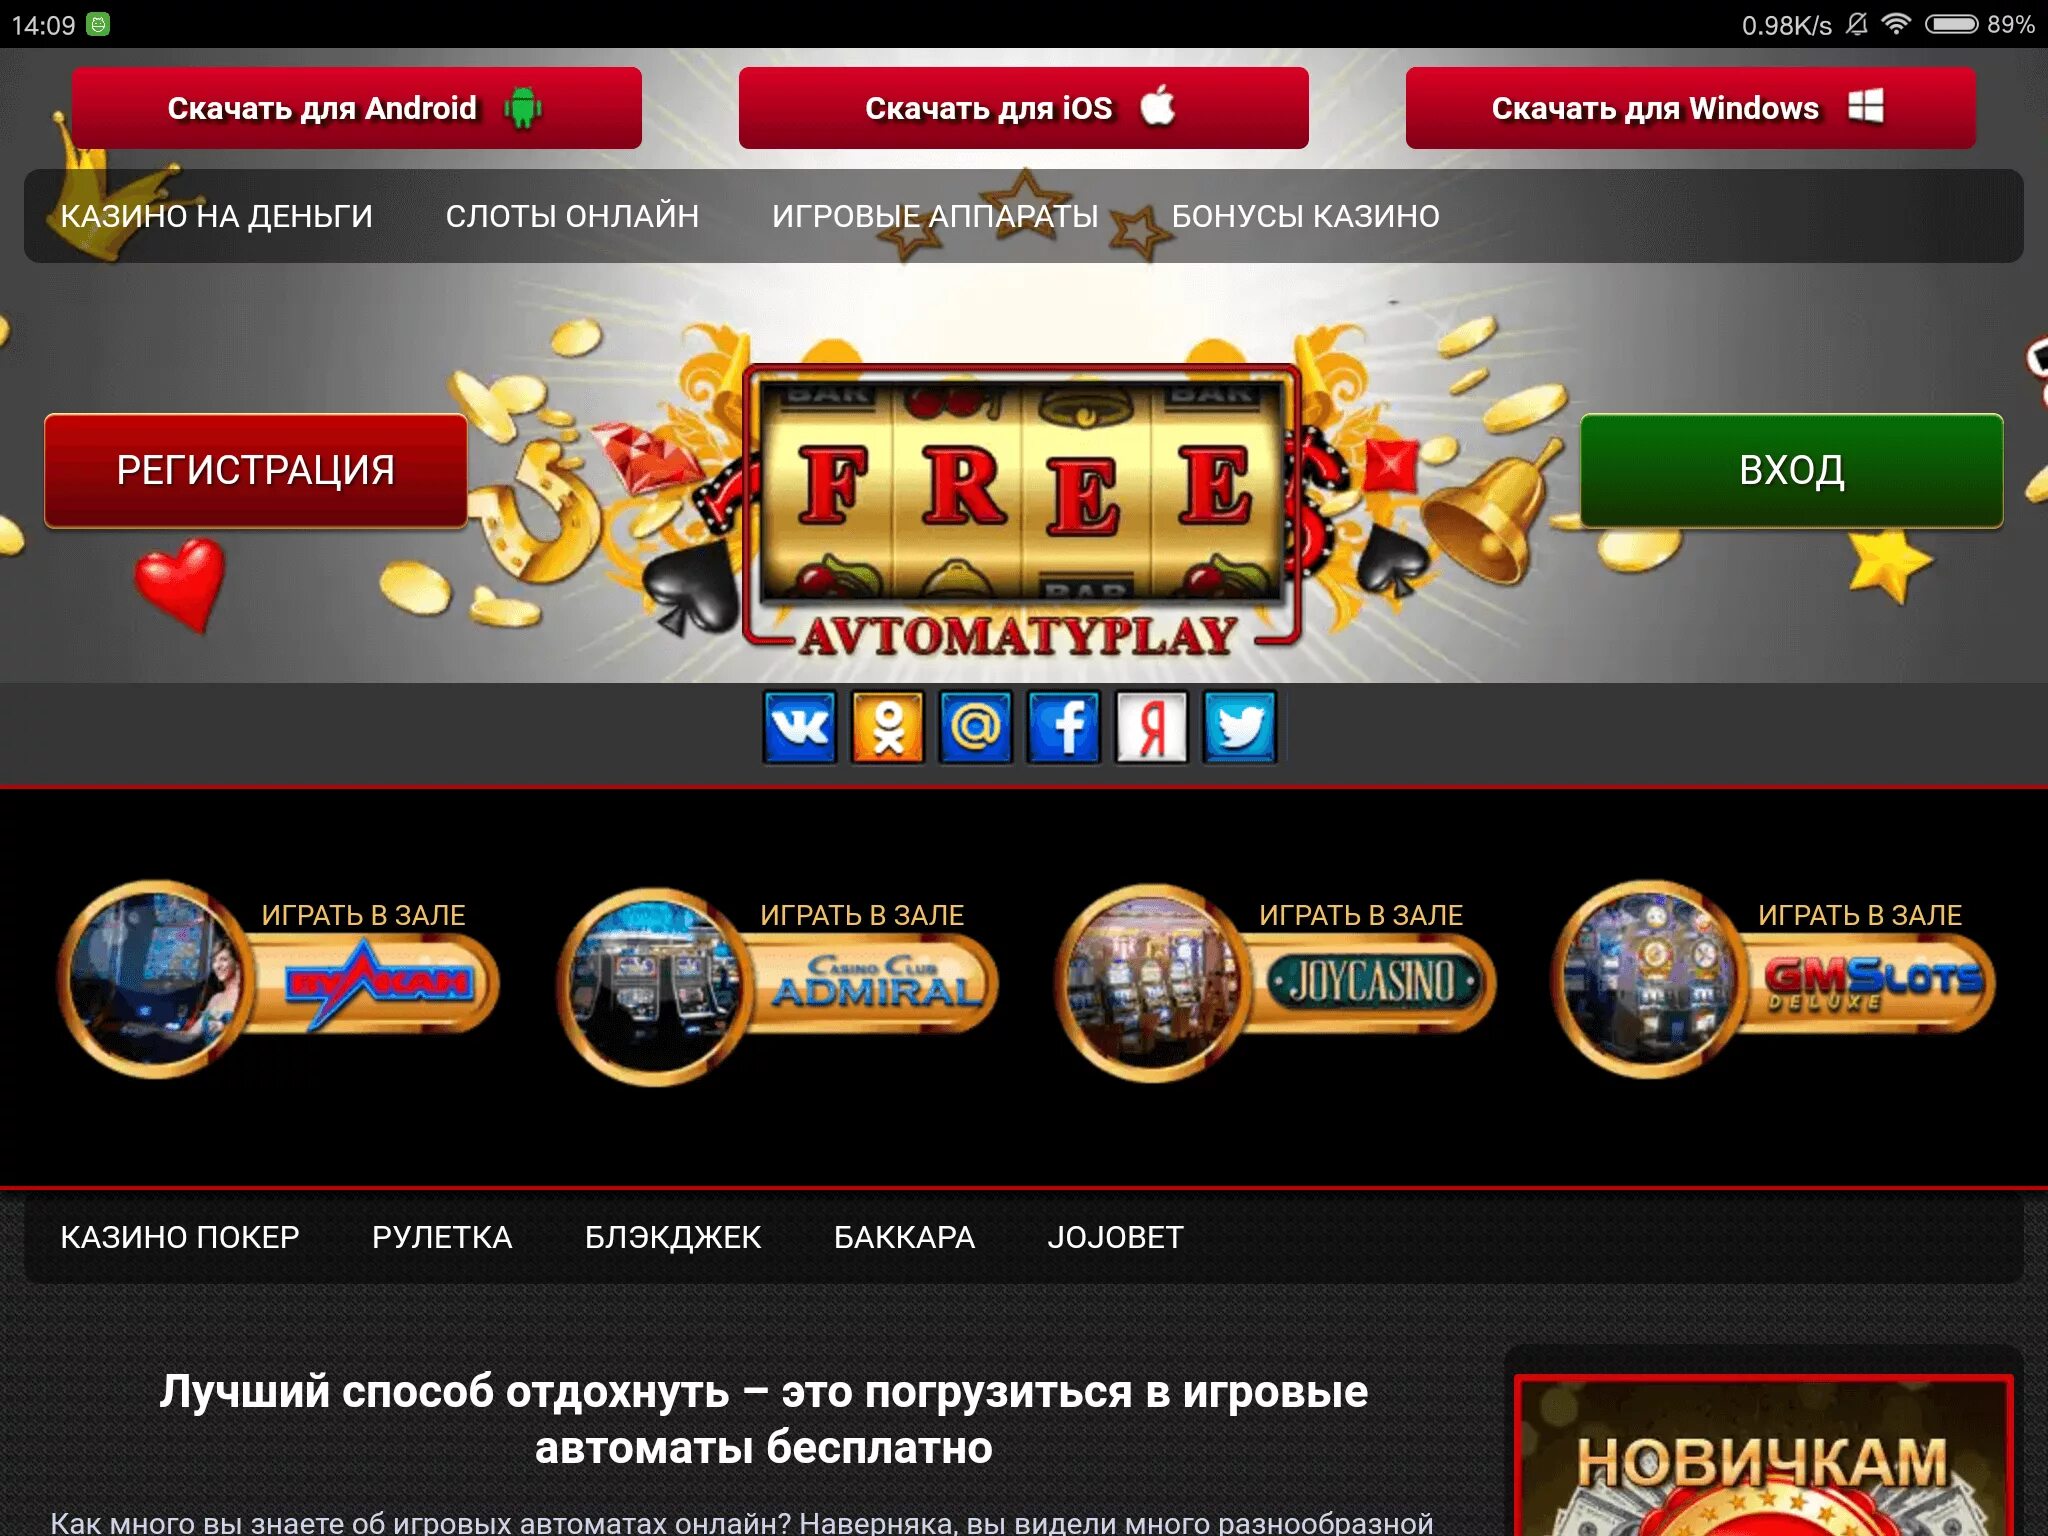 Champion casino champion slot machines net ru. Игровой клуб чемпион. Казино чемпион на деньги. Баннер казино.